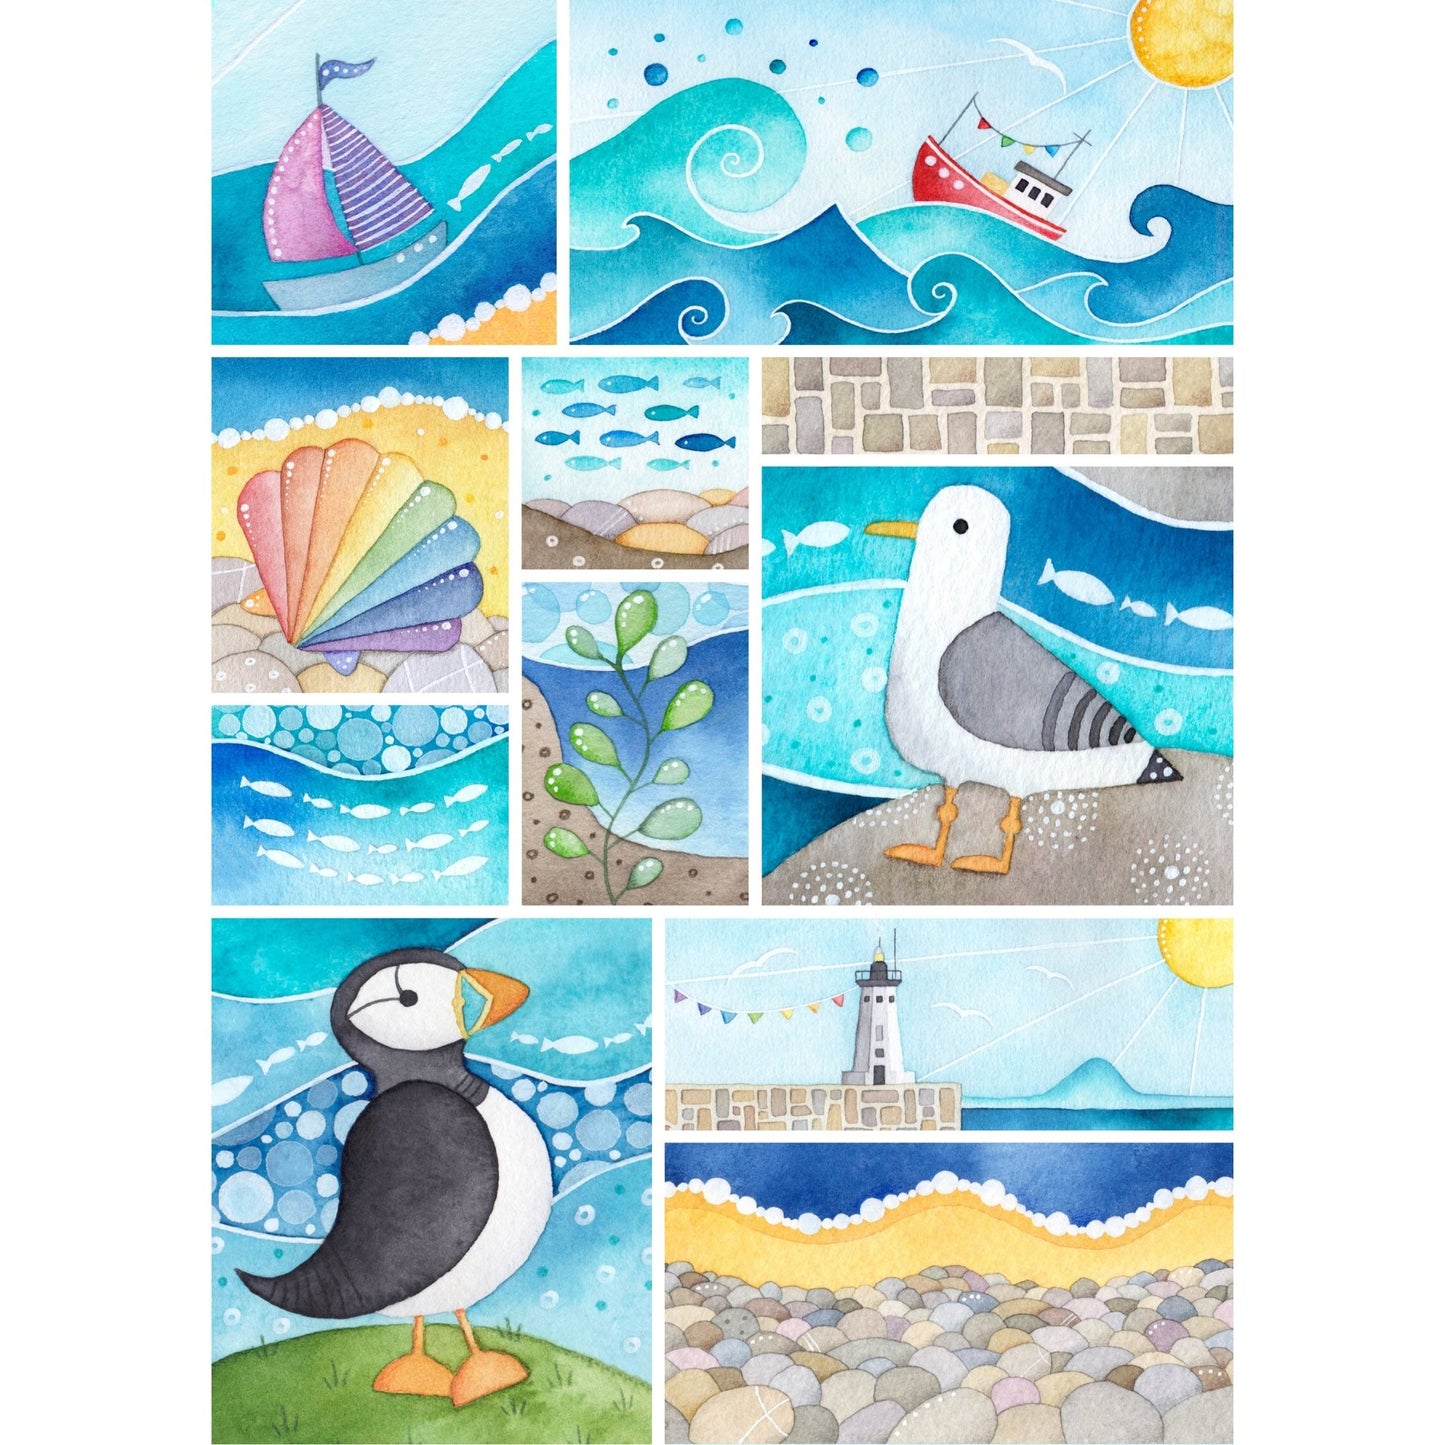 Seaside Print - Seagull, Puffin, Boats, Lighthouse - A4 Signed Watercolour Beach Art Print - East Neuk Beach Crafts